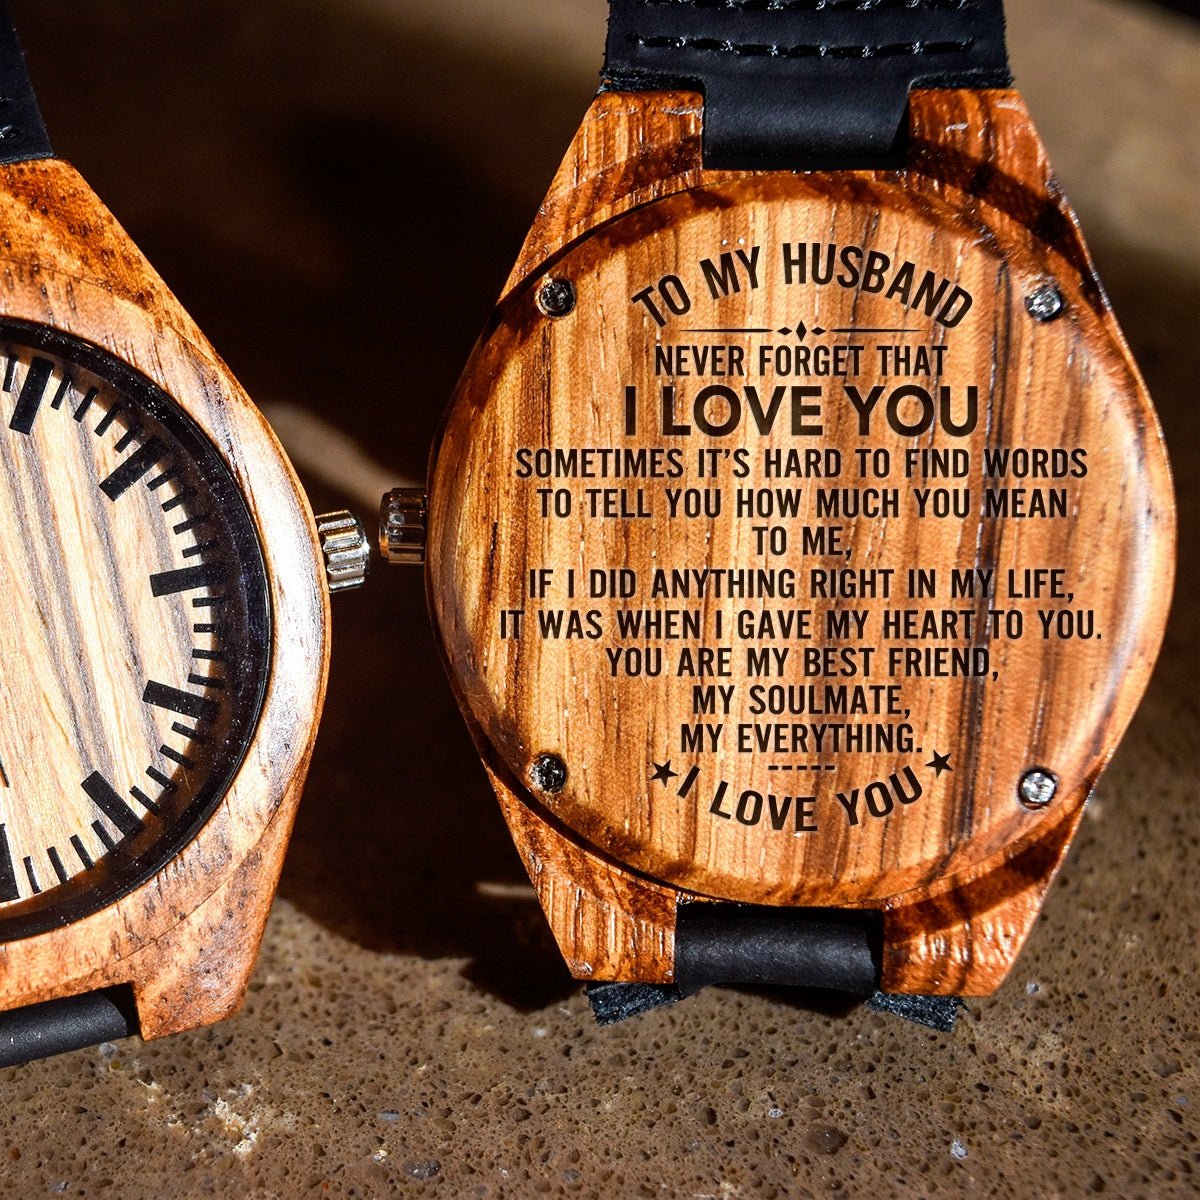 To My Husband I Love You - Engraved Zebra Watch